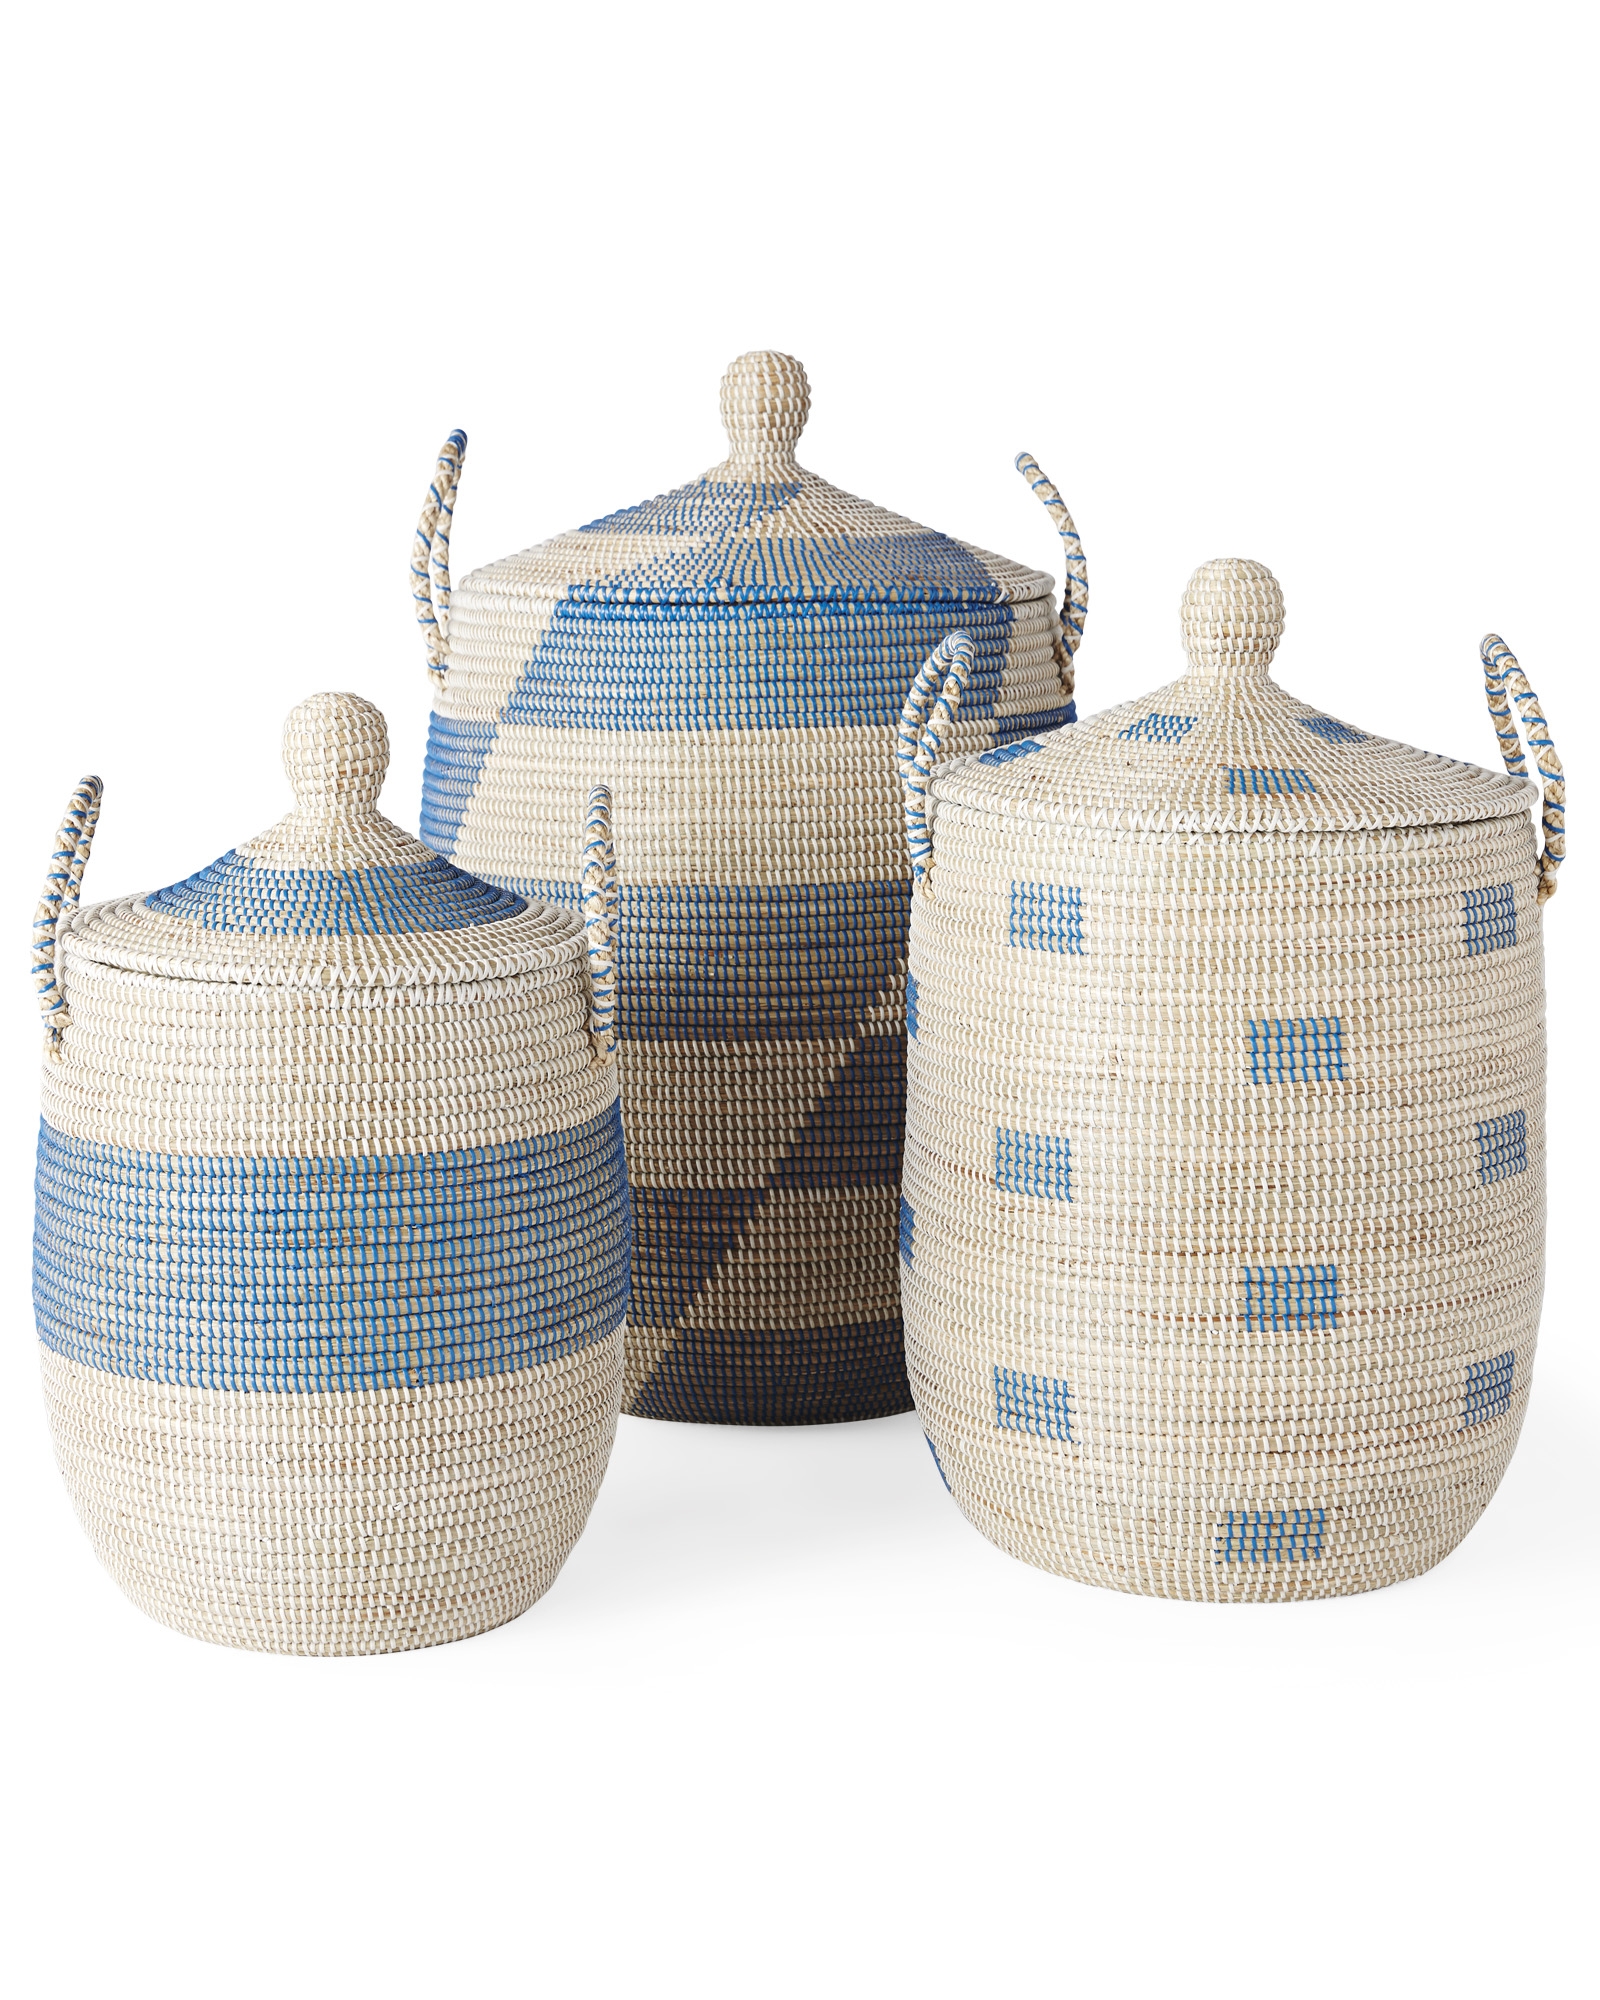 Striped La Jolla Basket - Blue - Small - Image 1